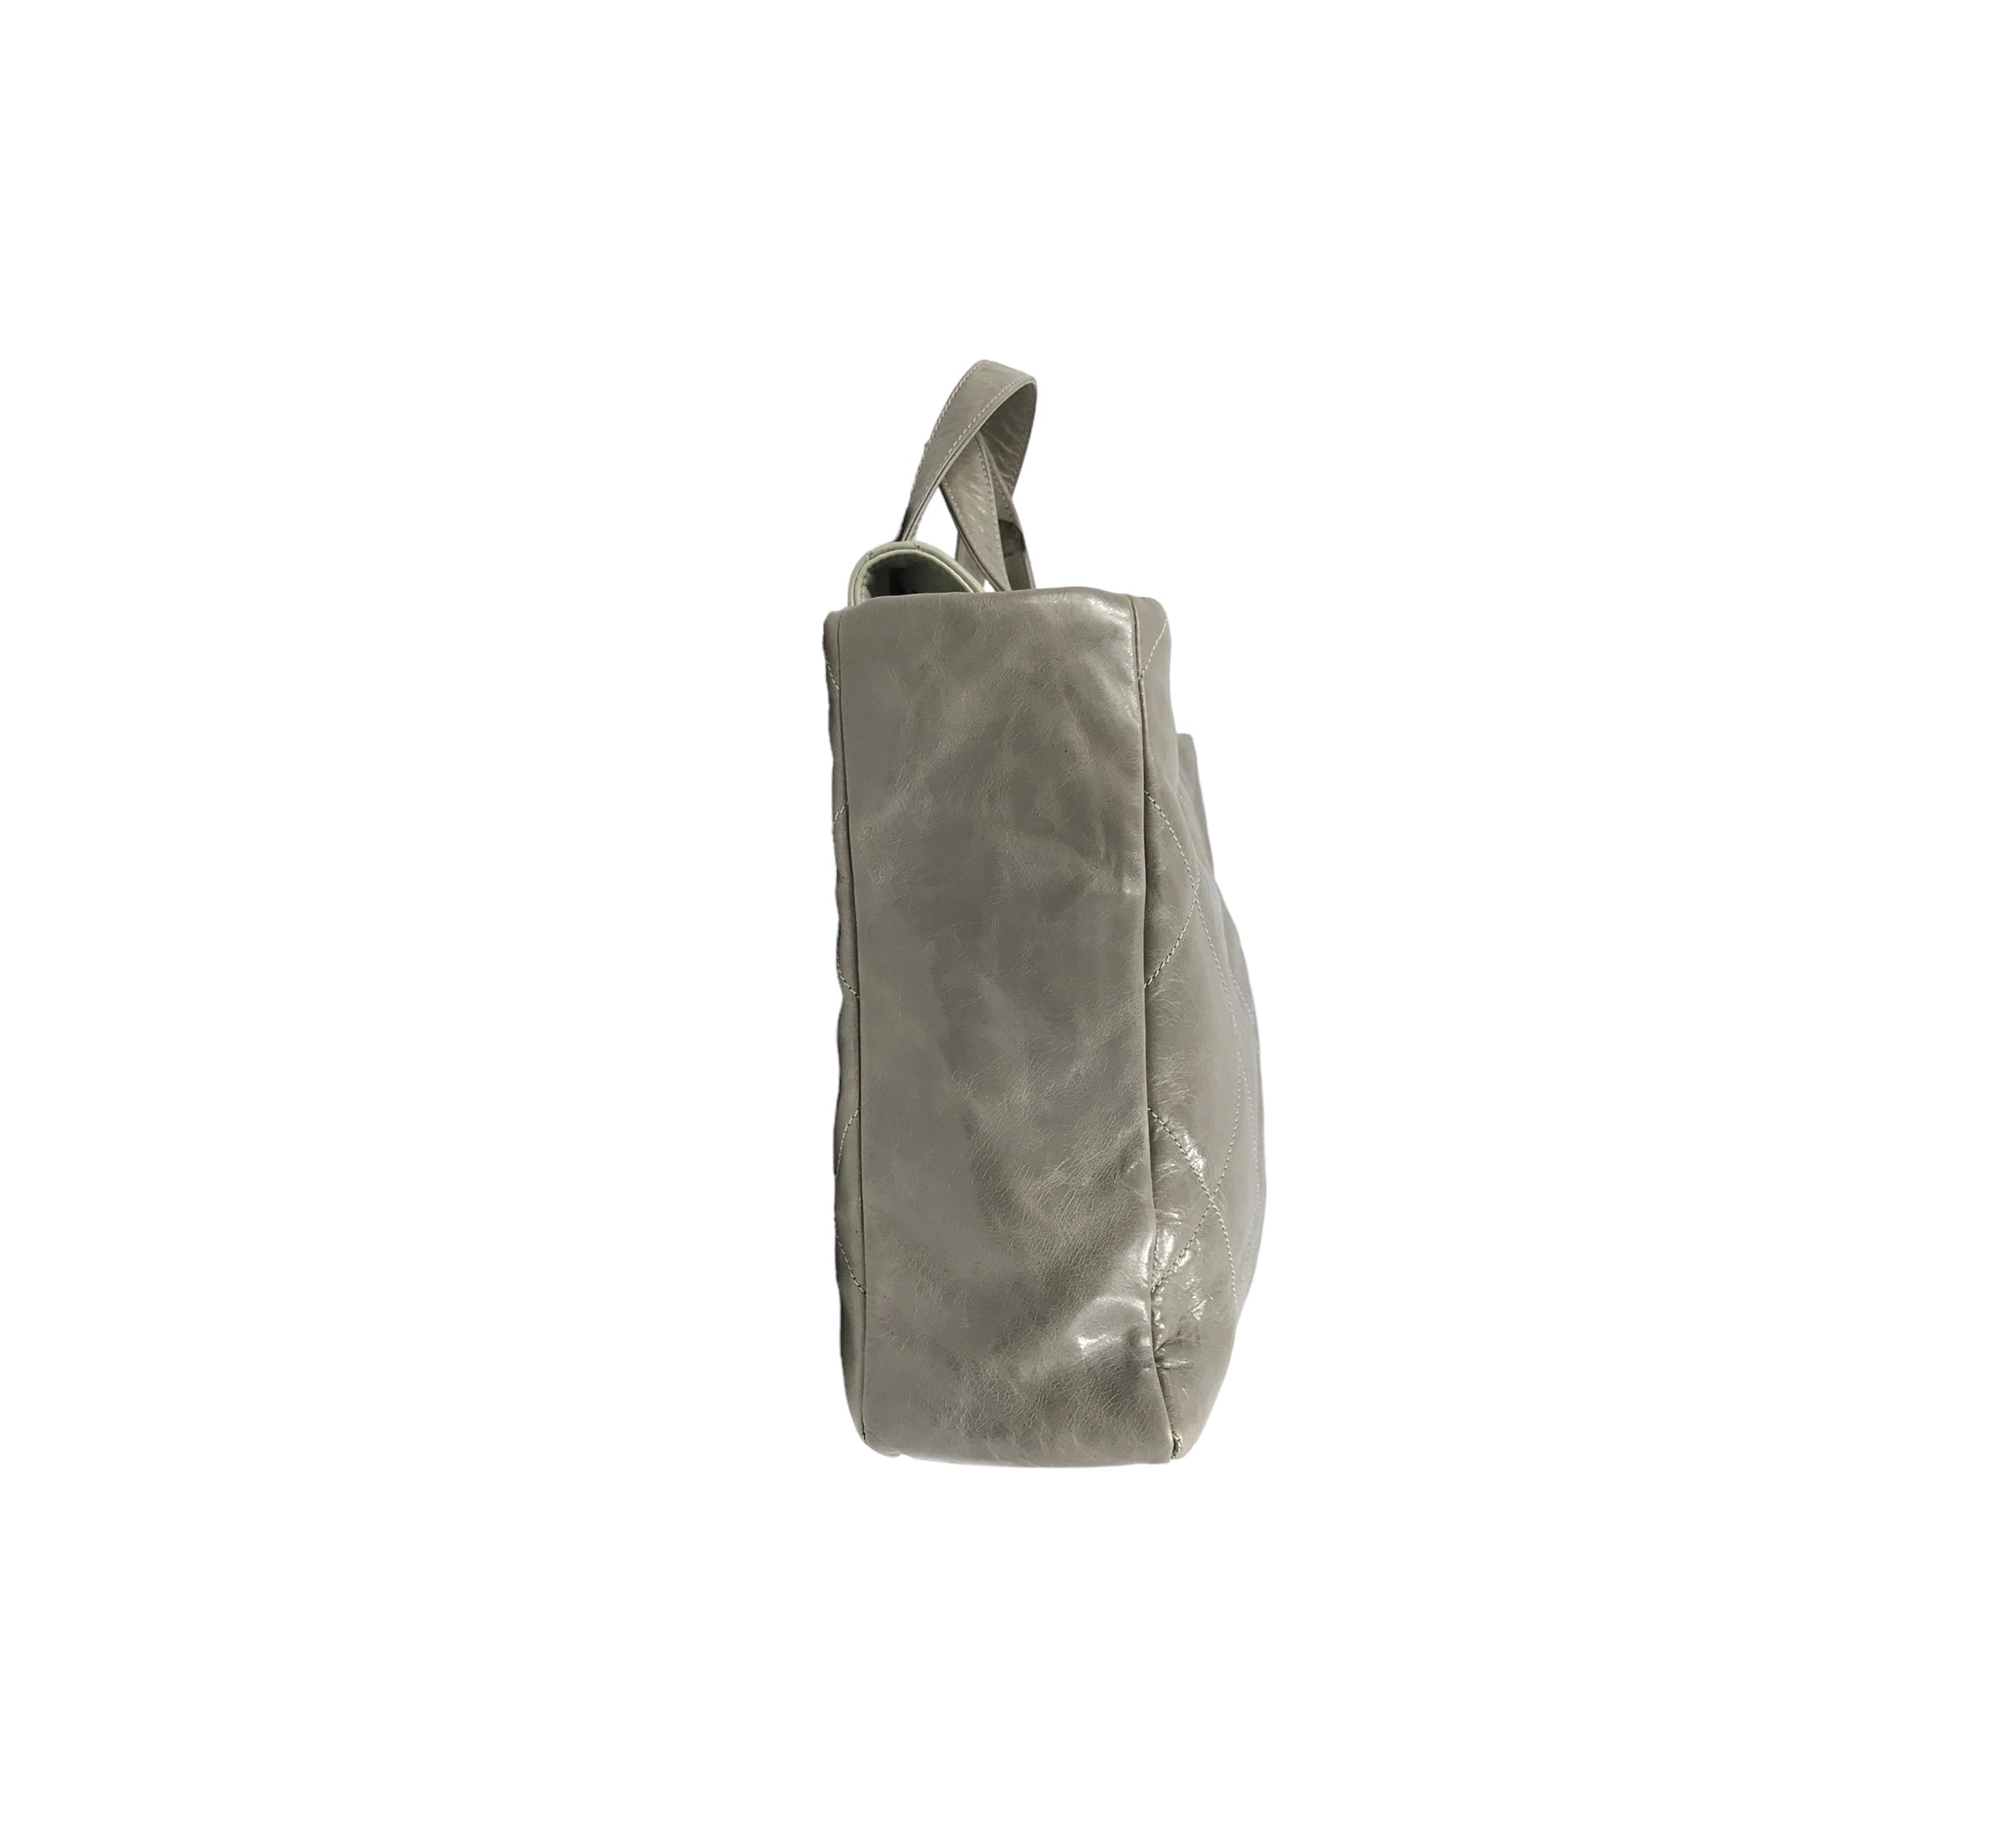 Two Tone Light/Dark Grey Quilted Glazed Portobello Tote Bag W/SHW